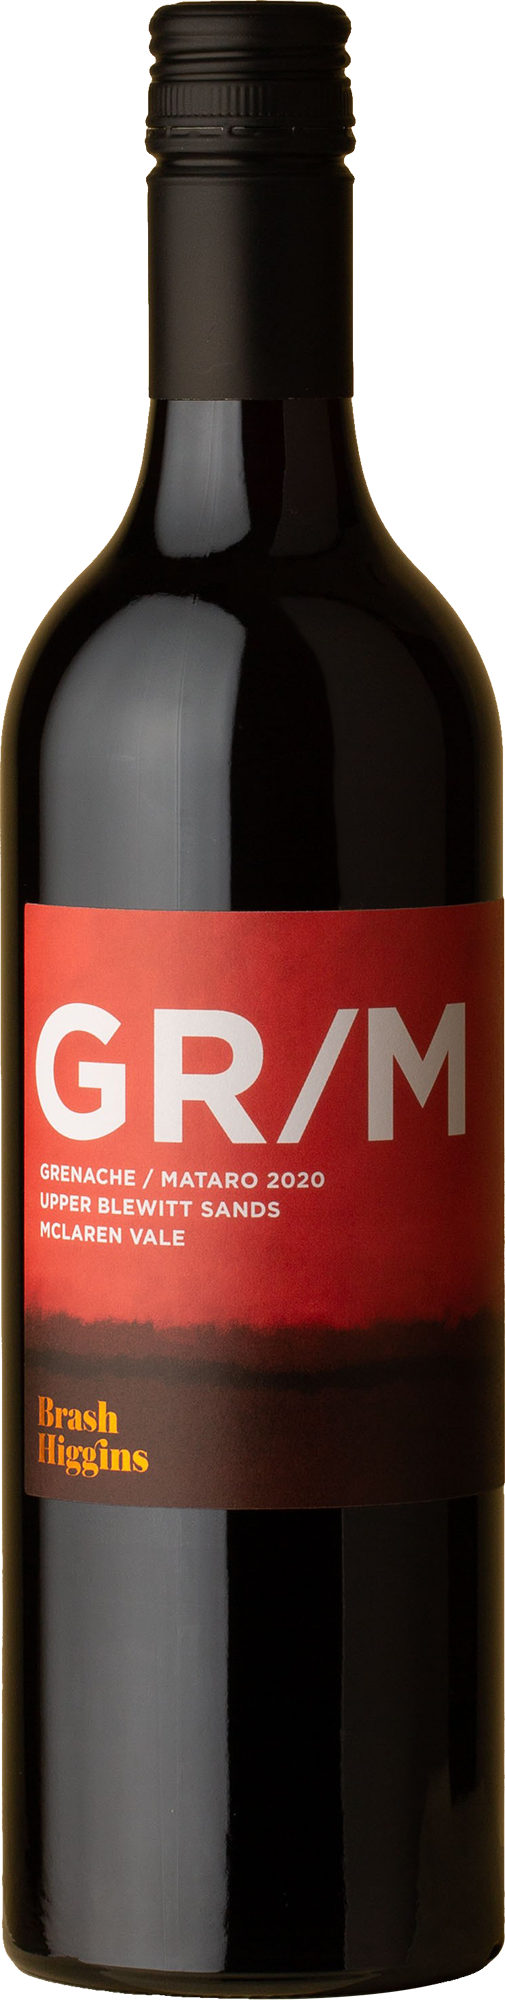 Brash Higgins - Upper Blewitt Sands GR/M Grenache / Mataro 2020 Red Wine